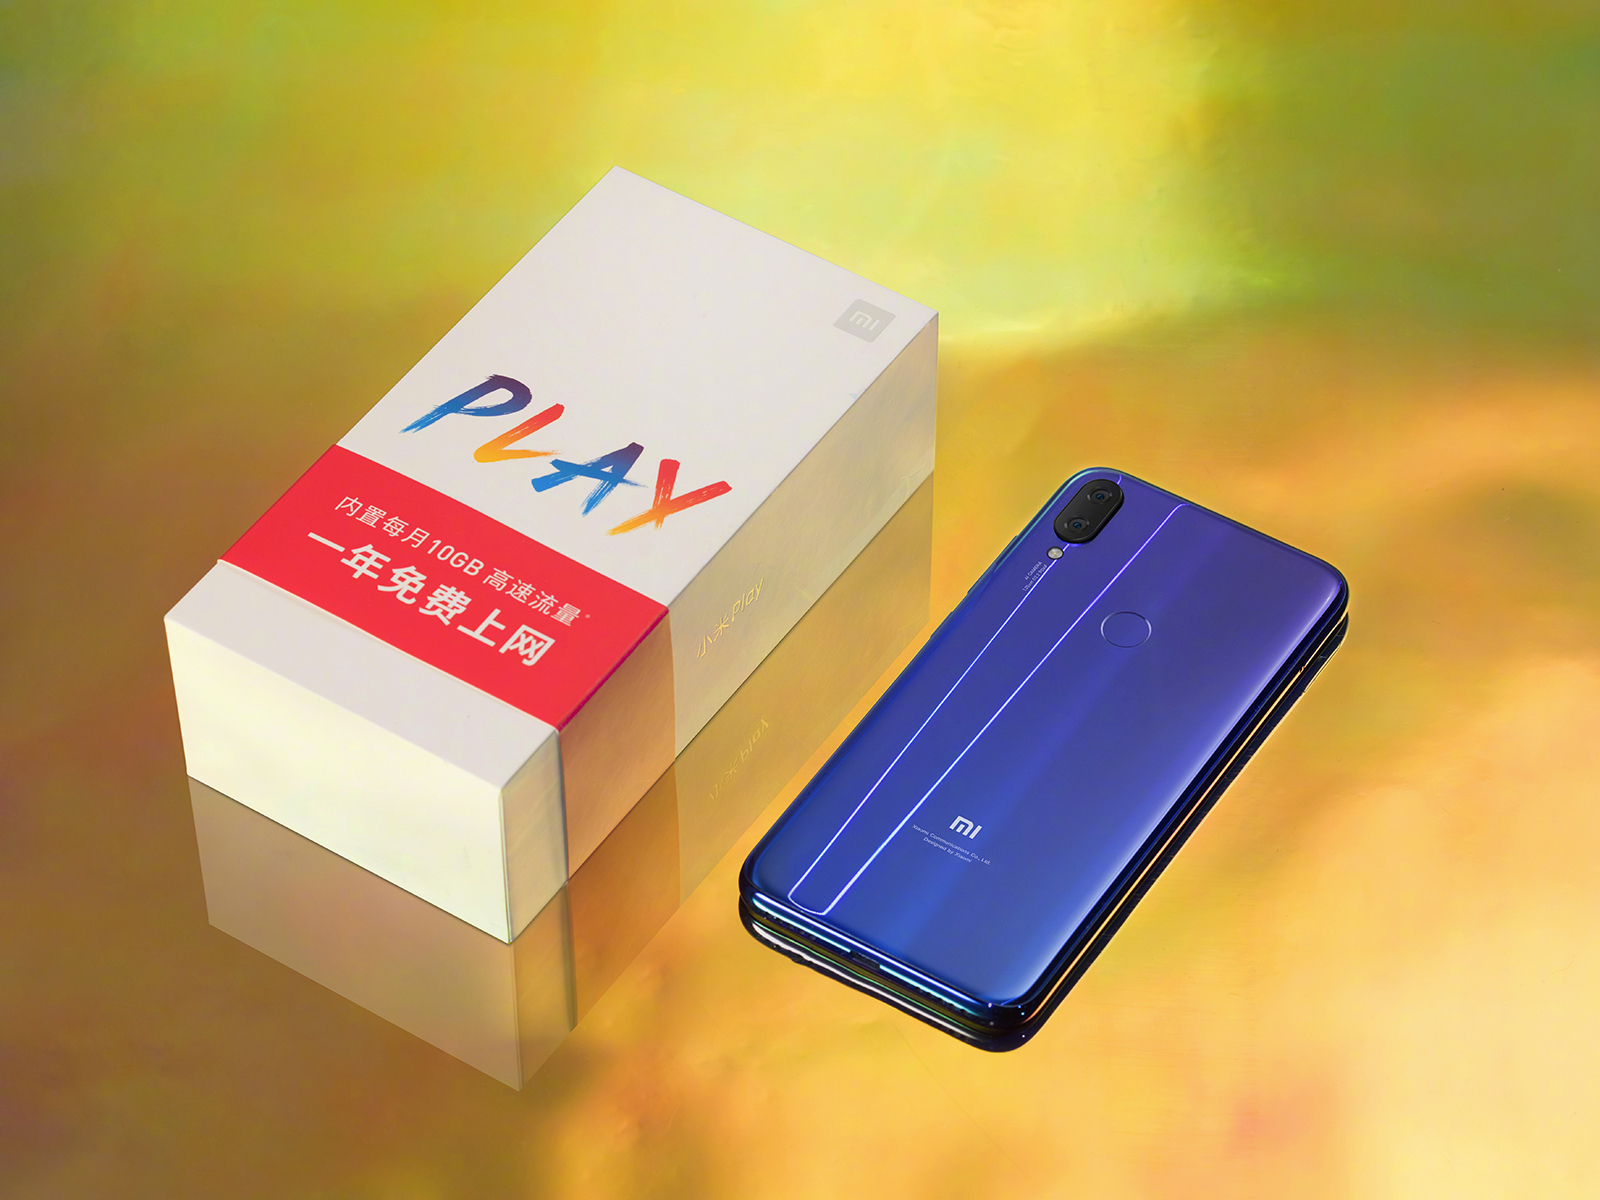 Xiaomi Mi Play Frp